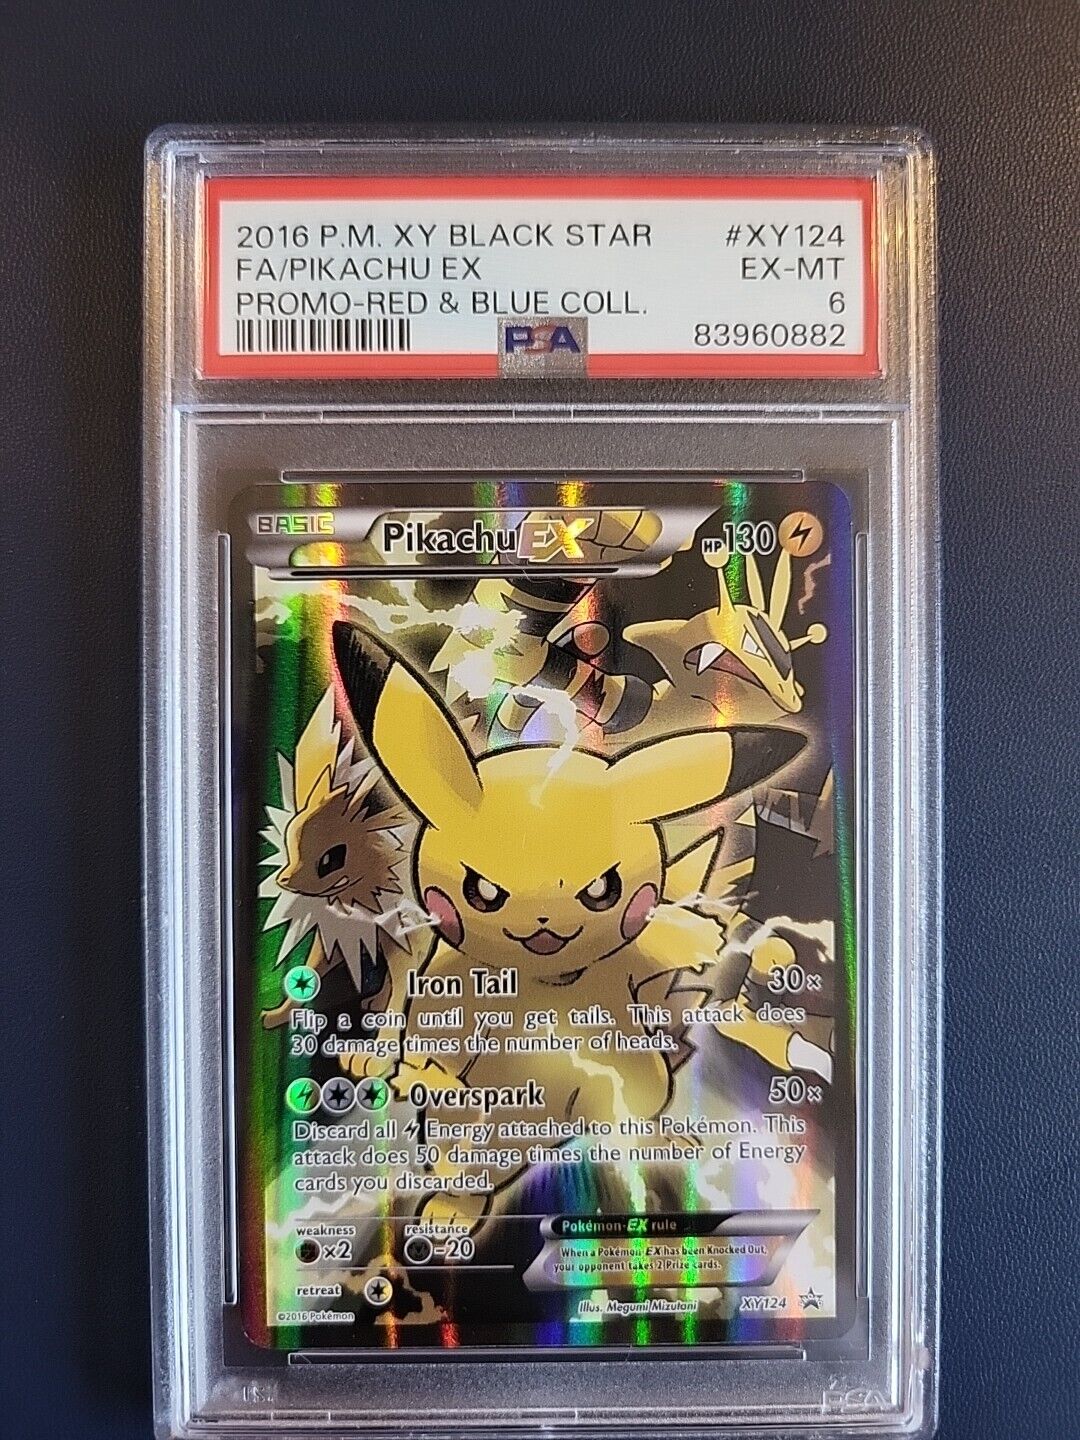 Pikachu EX XY124 Full Art Black Star Promo 2016 Pokemon Card 